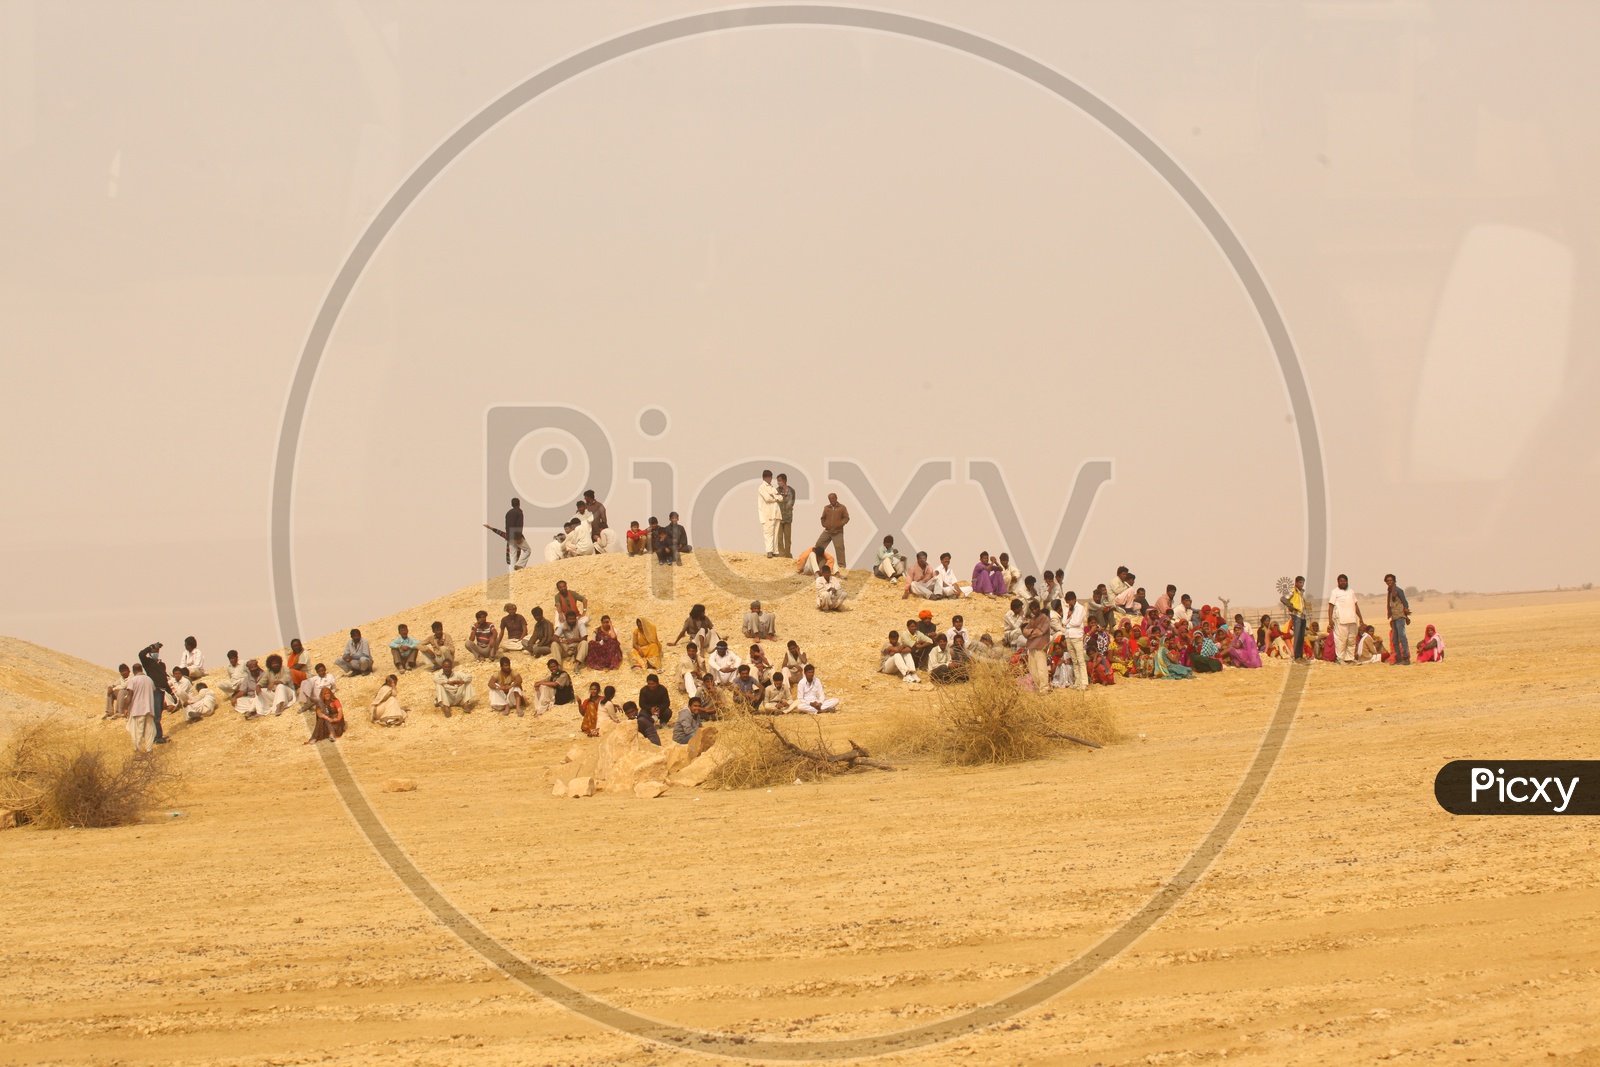 People in a desert